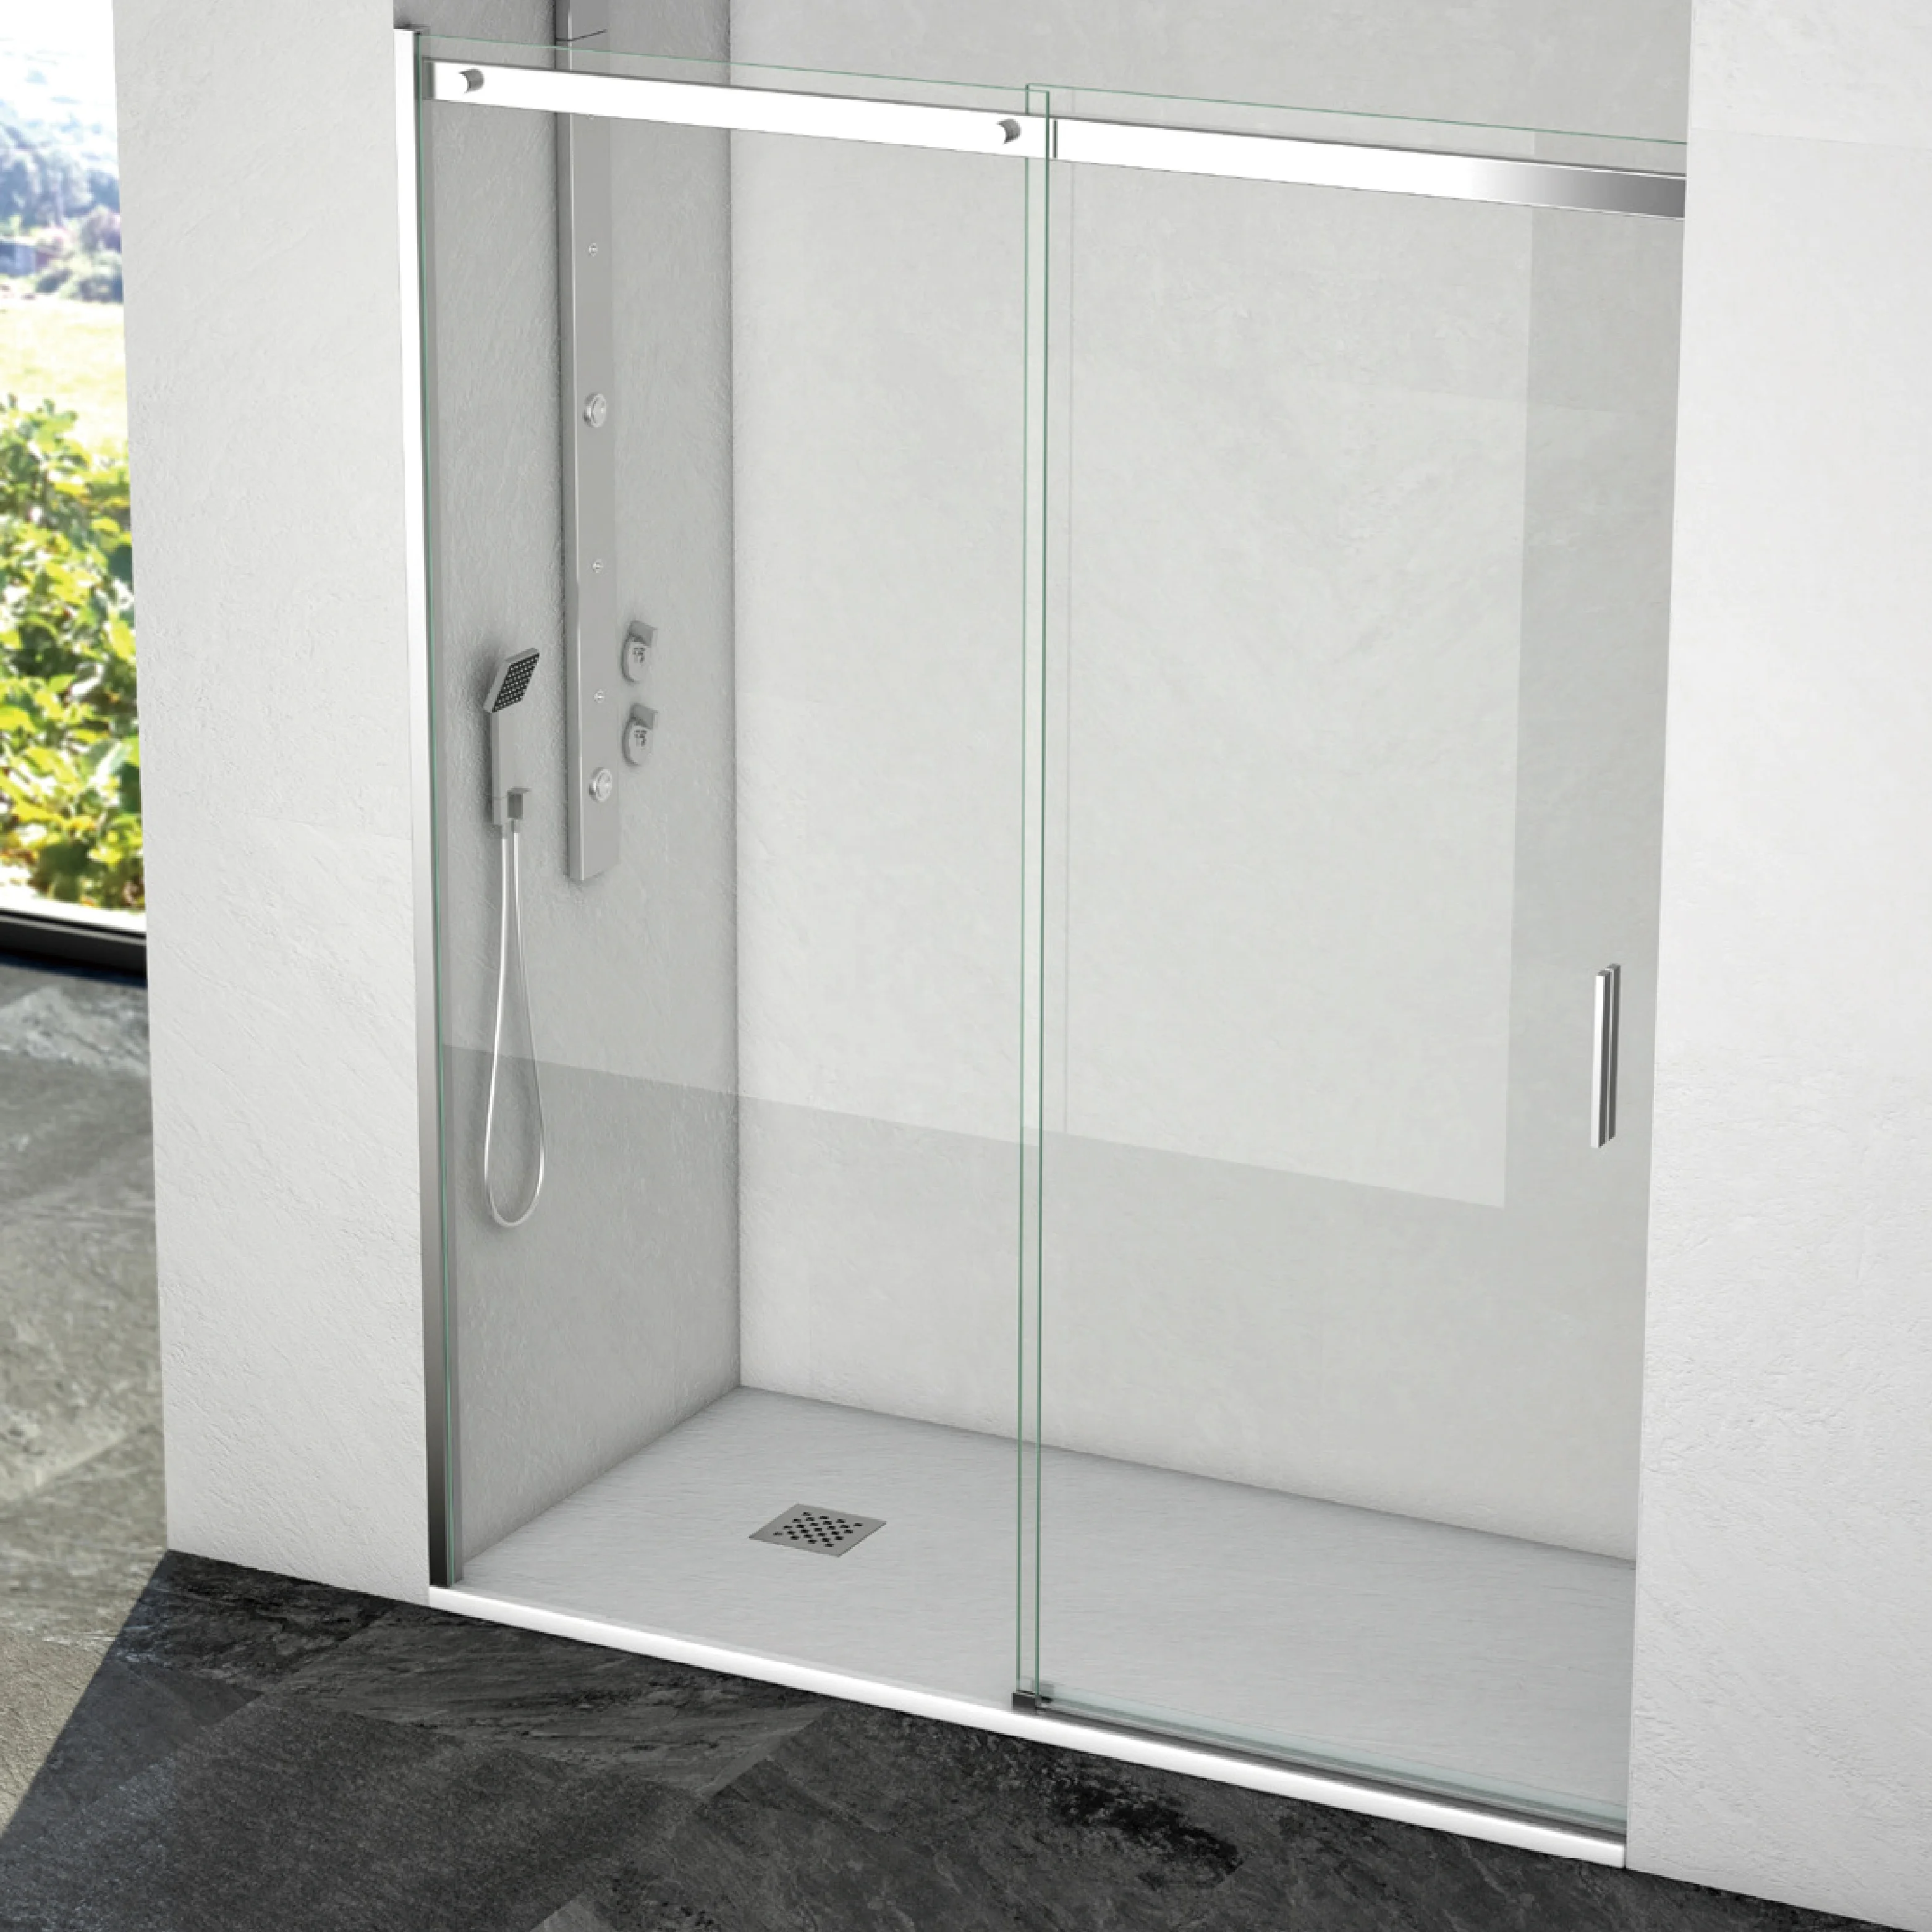 European Tempered Glass Toilet Bath Shower Room Cabin In Bathroom Shower Room